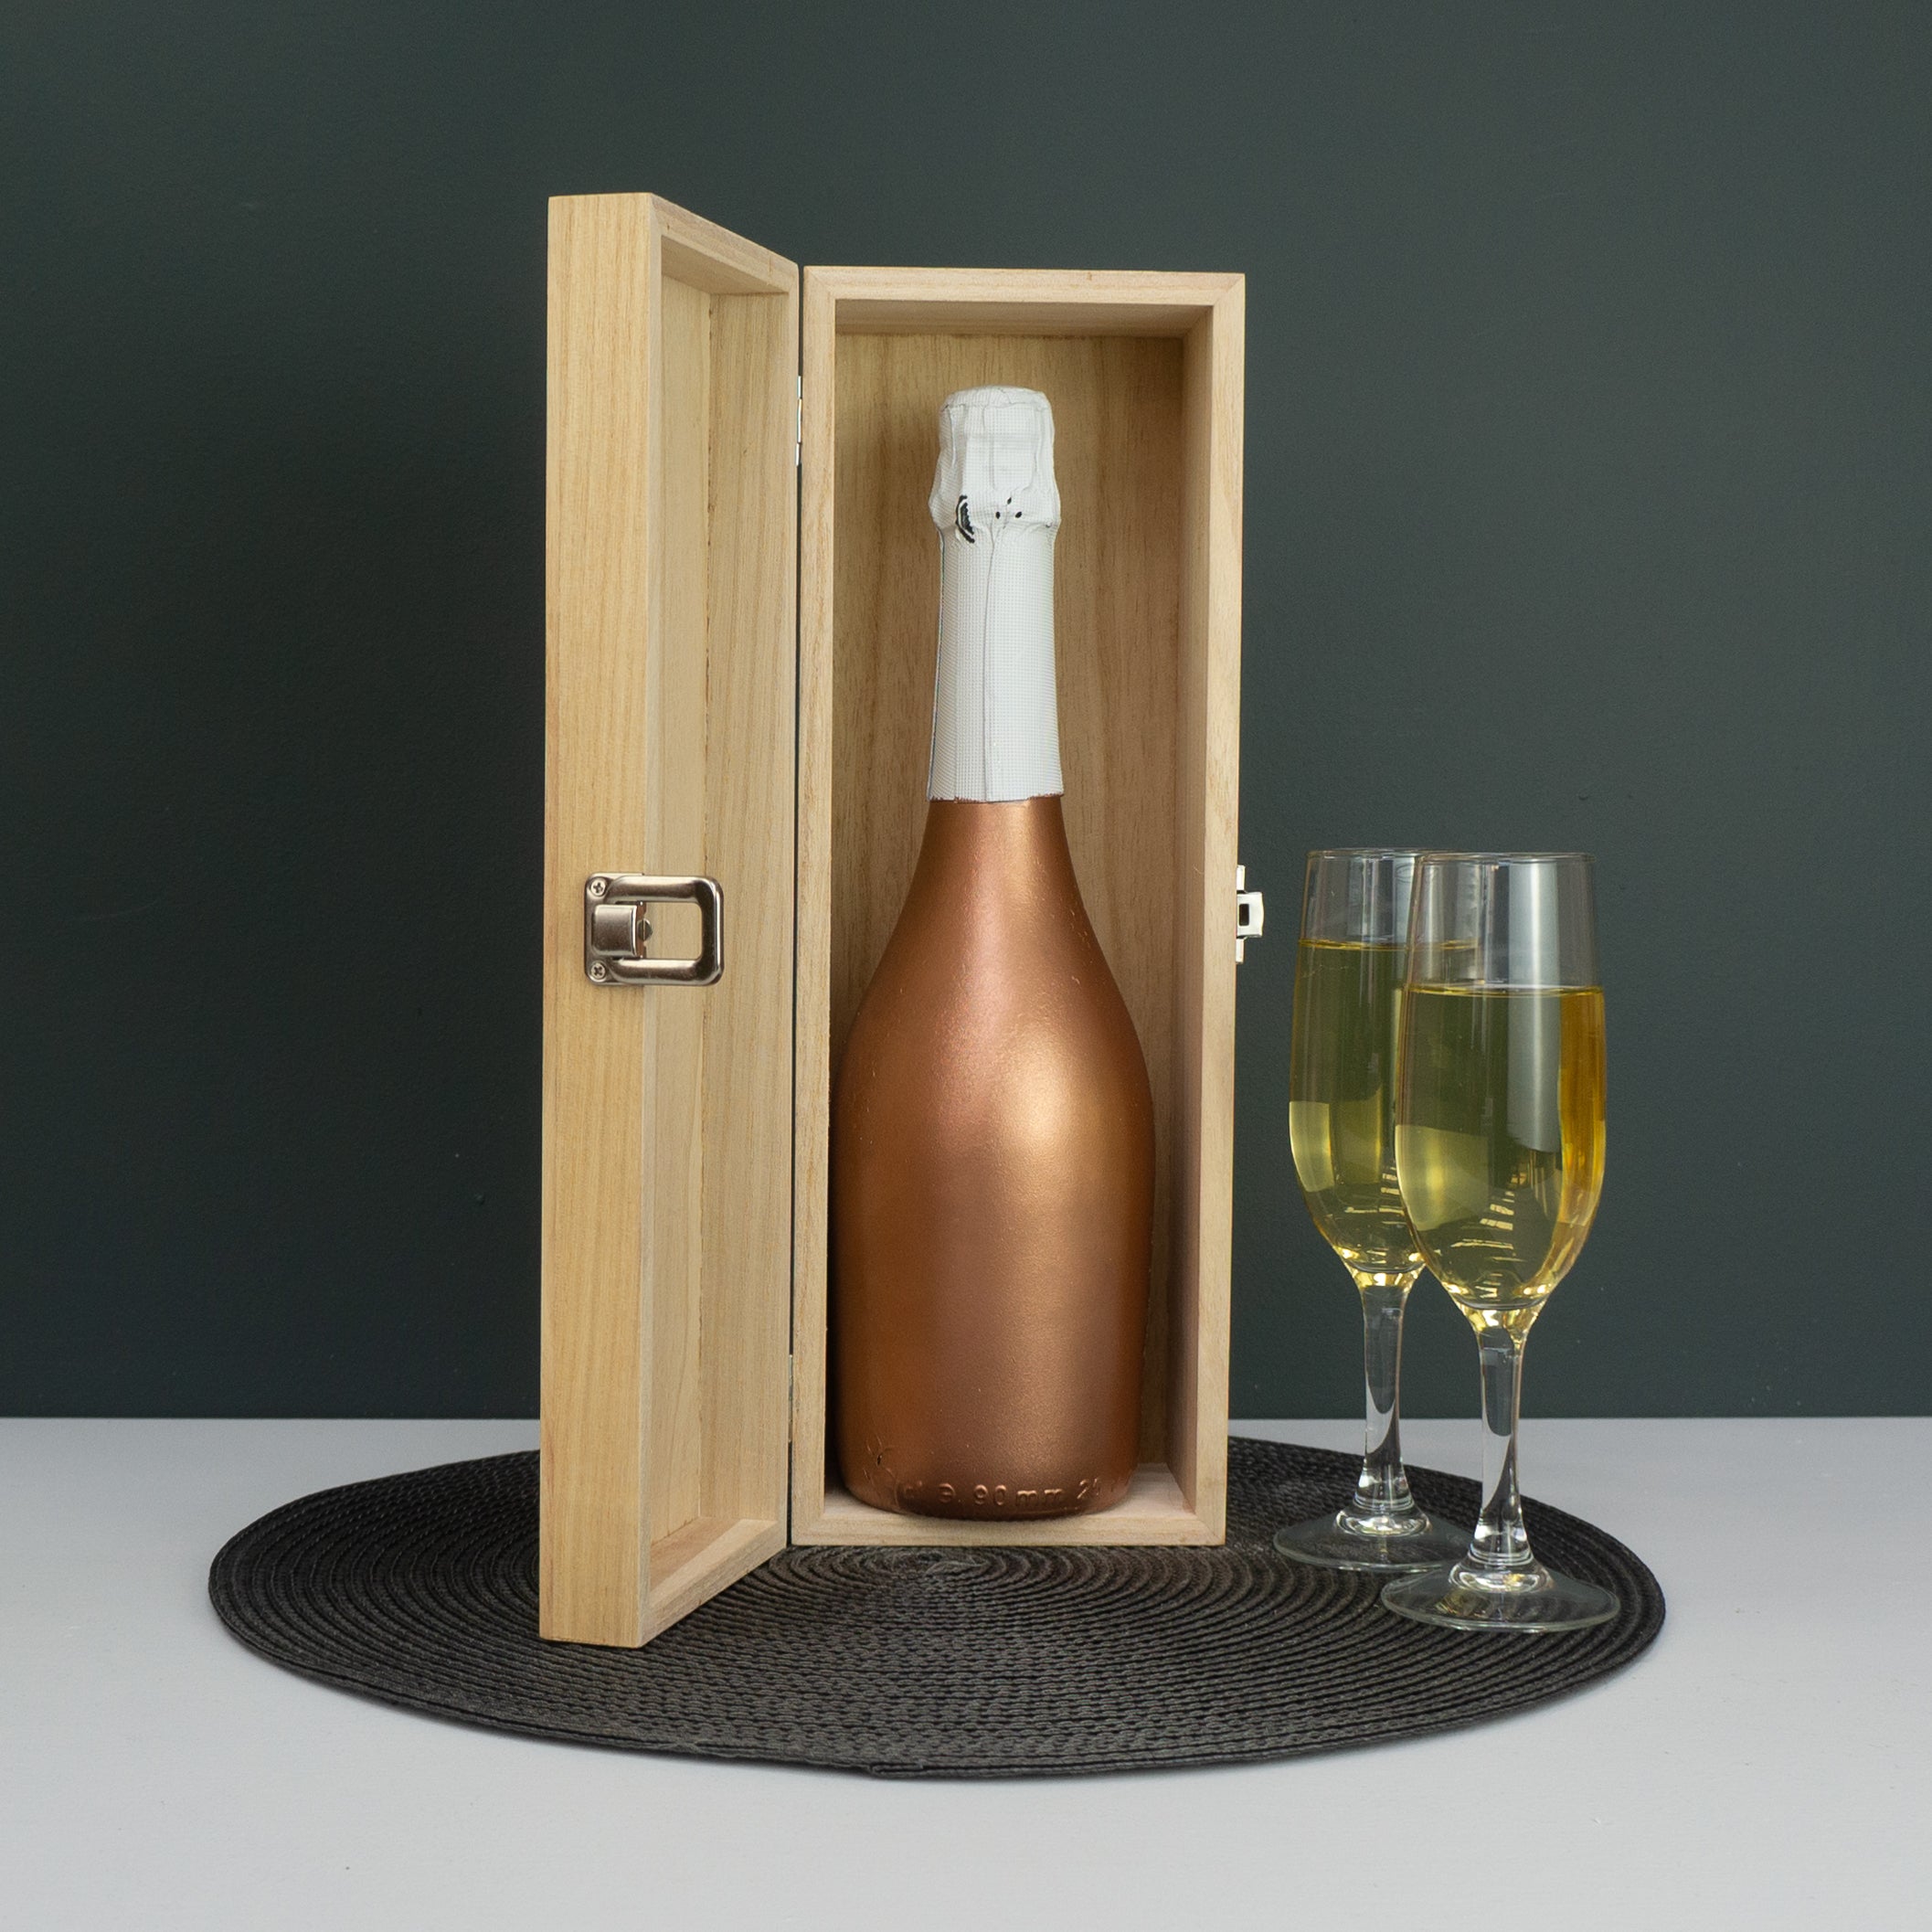 Personalised retirement present. Custom engraved wooden wine bottle box